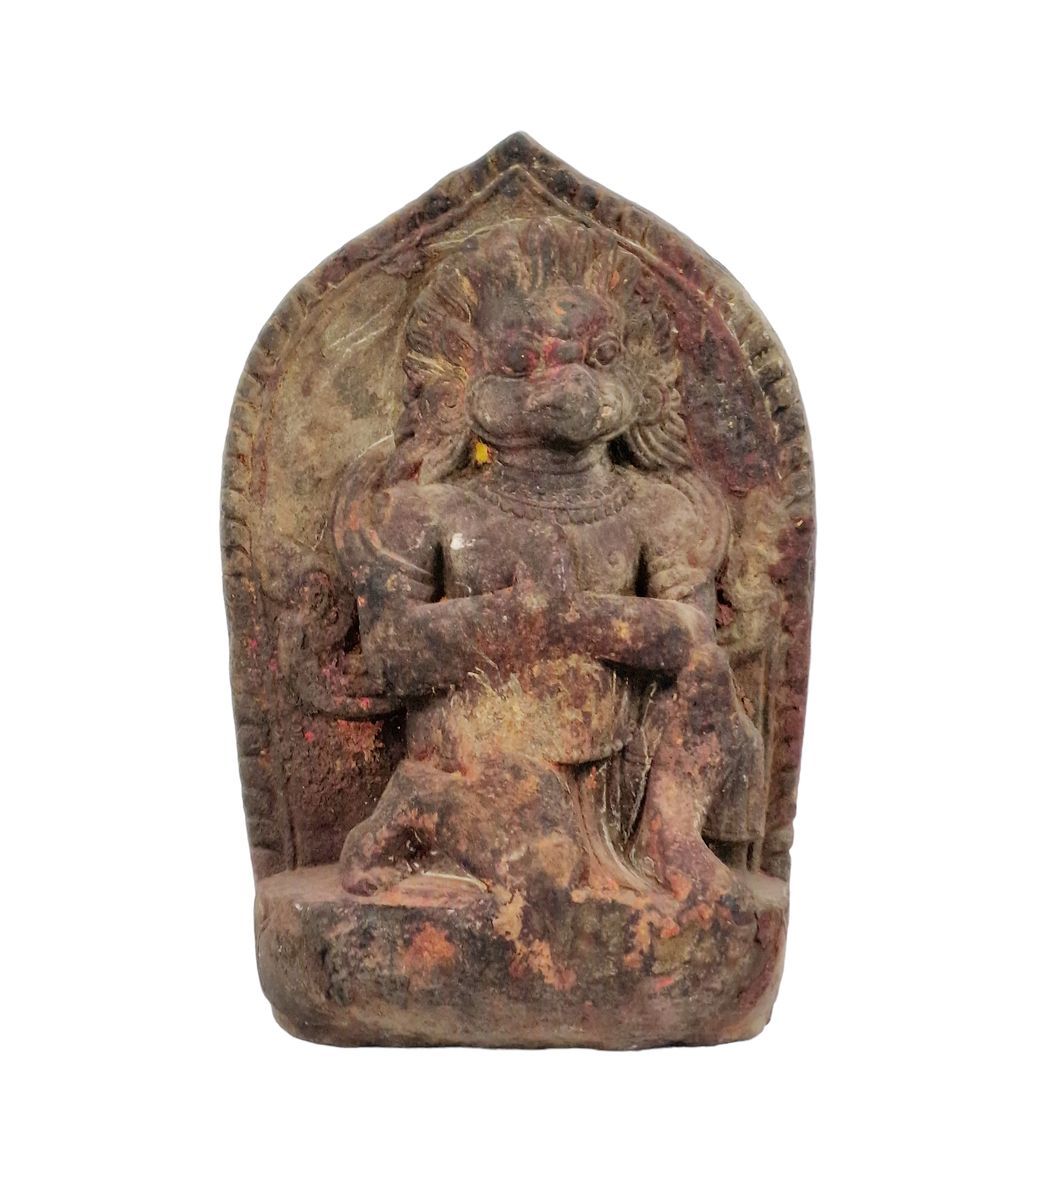 NEPAL 17-18ème SIECLE 祈祷中的佛教毗卢遮那神像石碑
灰色石头，有仪式感，表现了一个跪在莲花雕刻底座上的人物，双手合十的祈祷姿势。雕刻从一个&hellip;